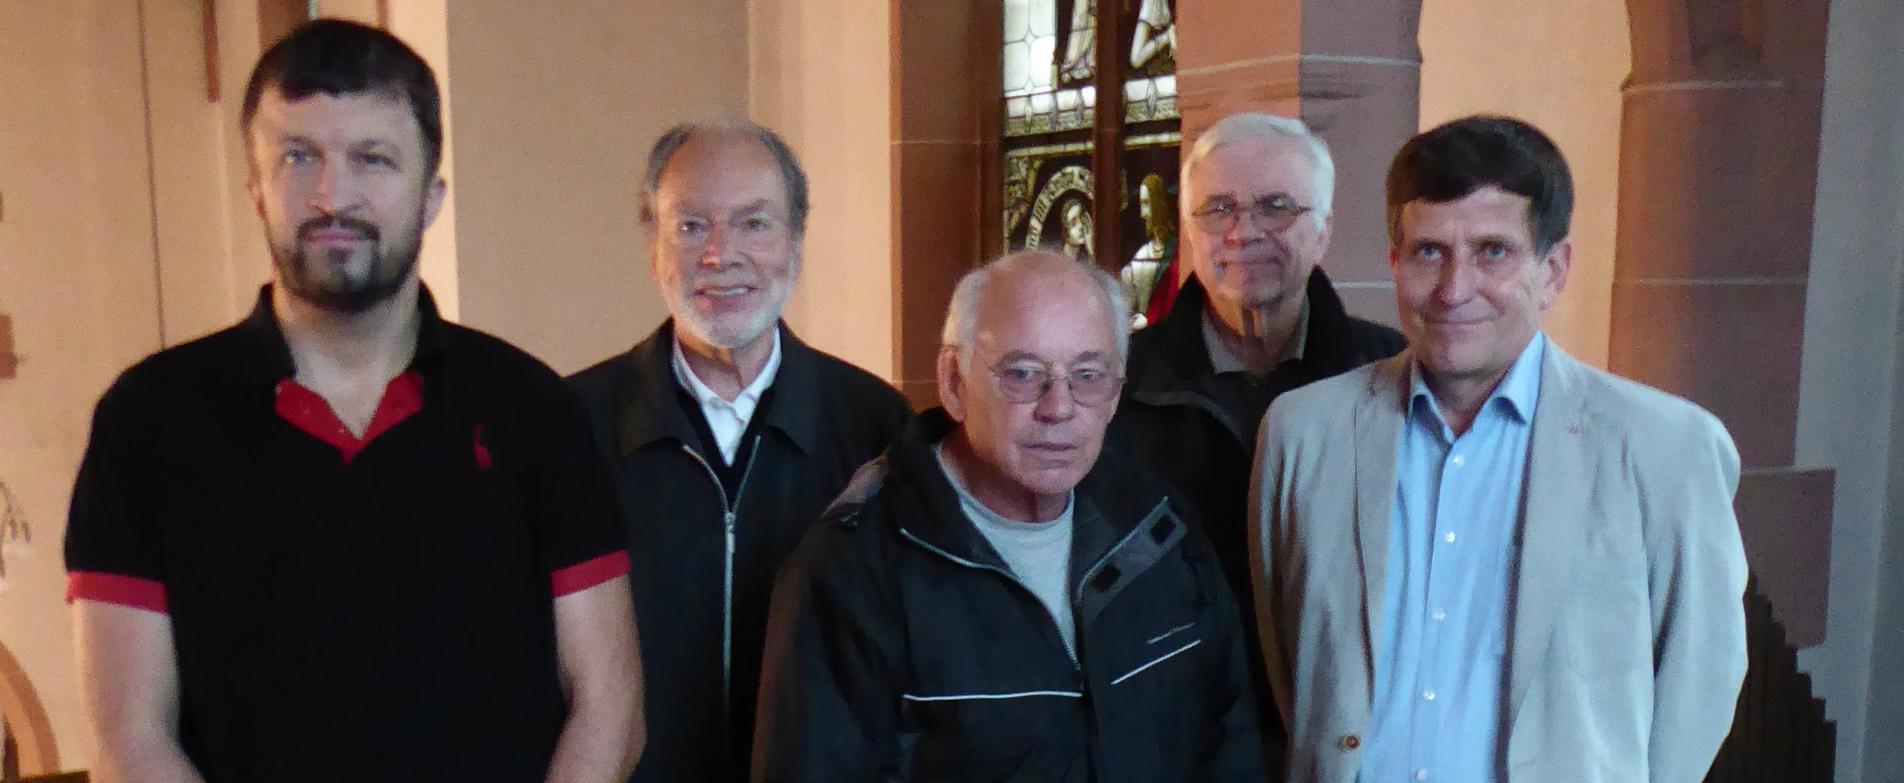 Männerschola St. Bonifatius: Anto Jukic, Henning Stahl, Walter Schmitz, Hugo Brehm, Michael Naton (v.l.n.r.) (c) Brigitta Gebauer 2019